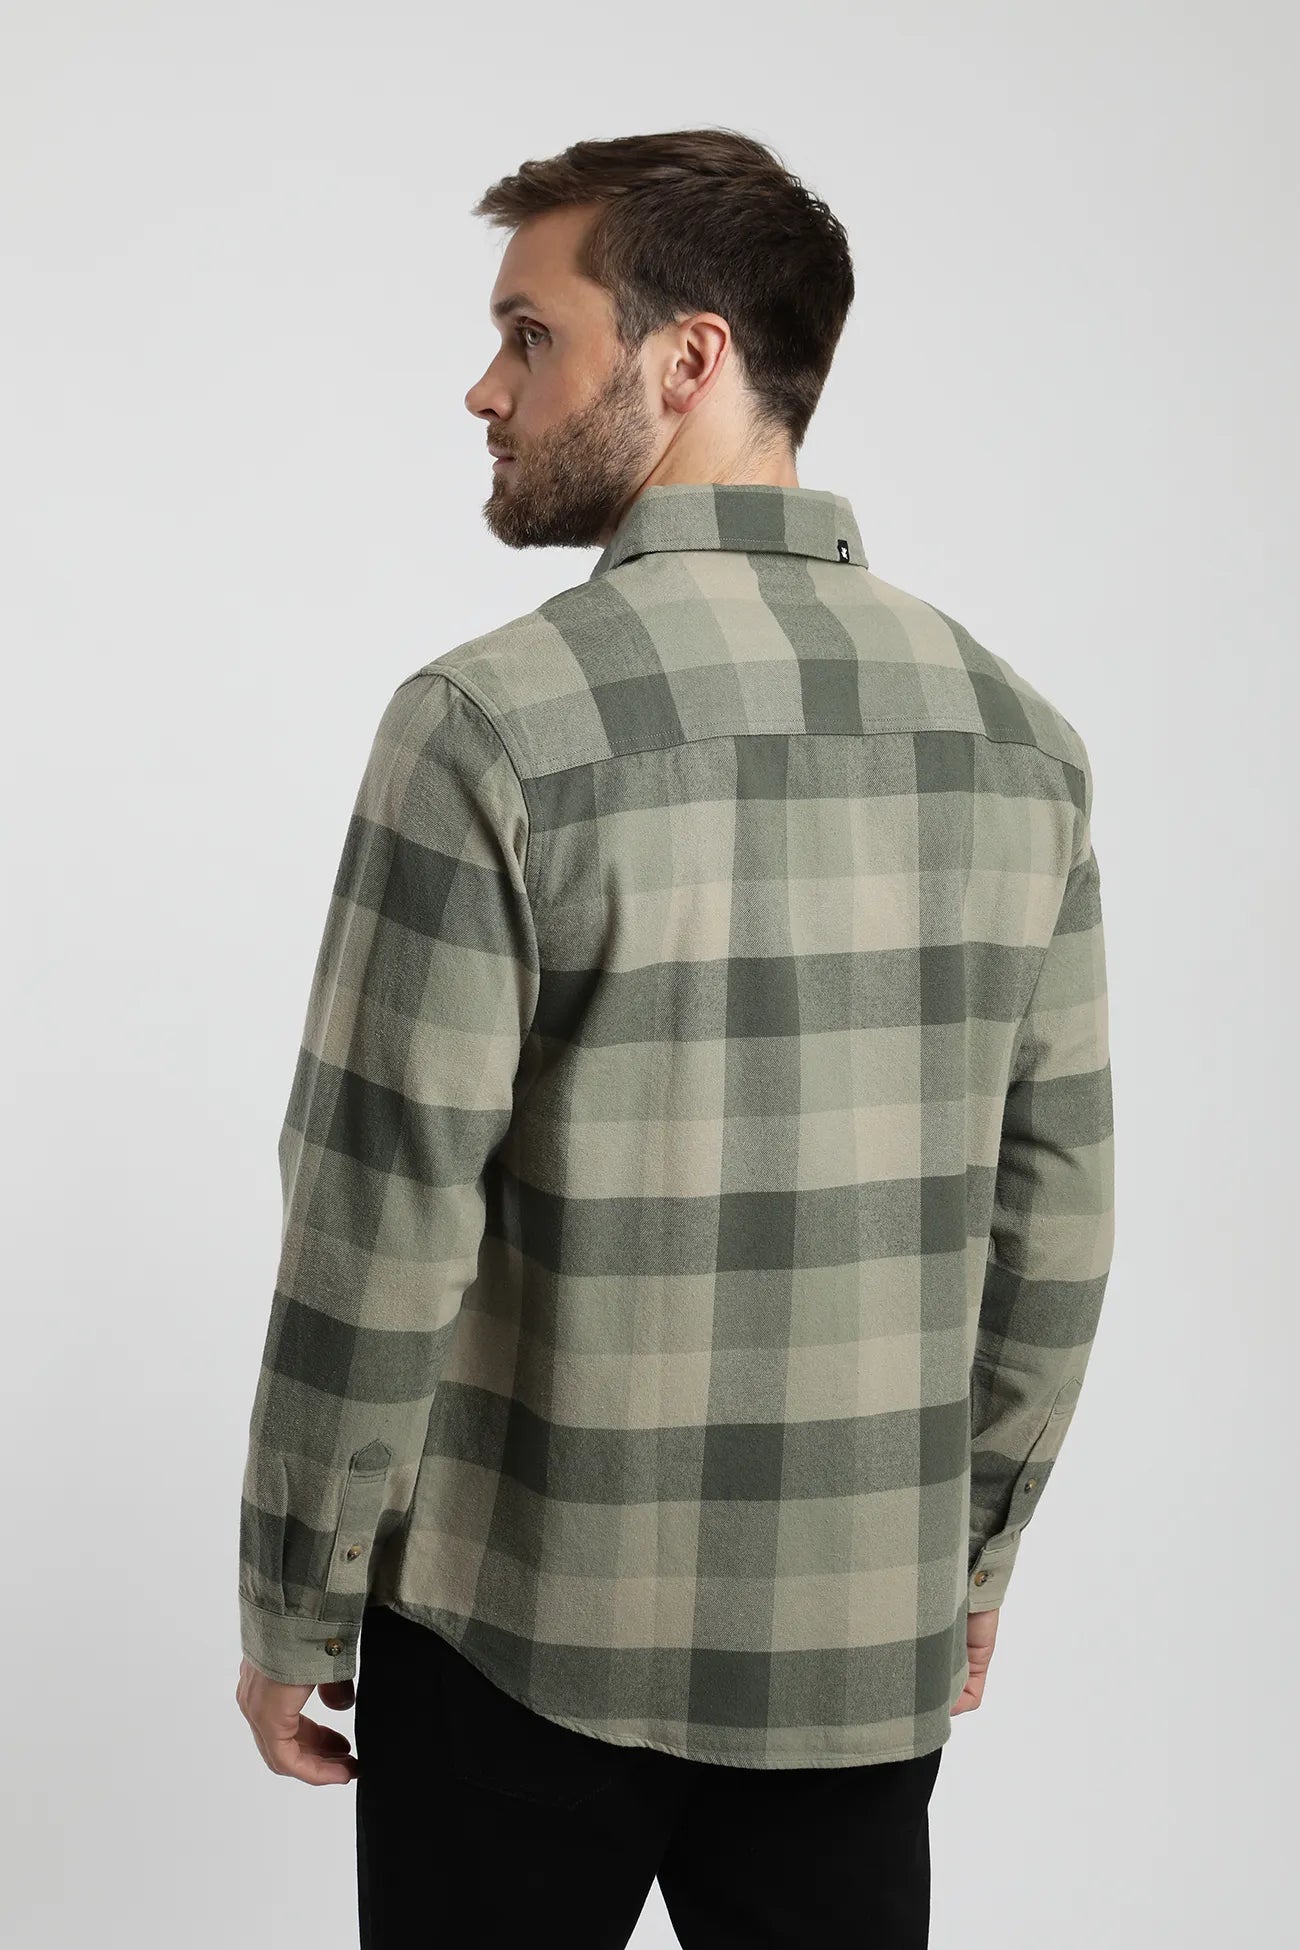 Camisa manga larga Print Franela verde - Algodón orgánico